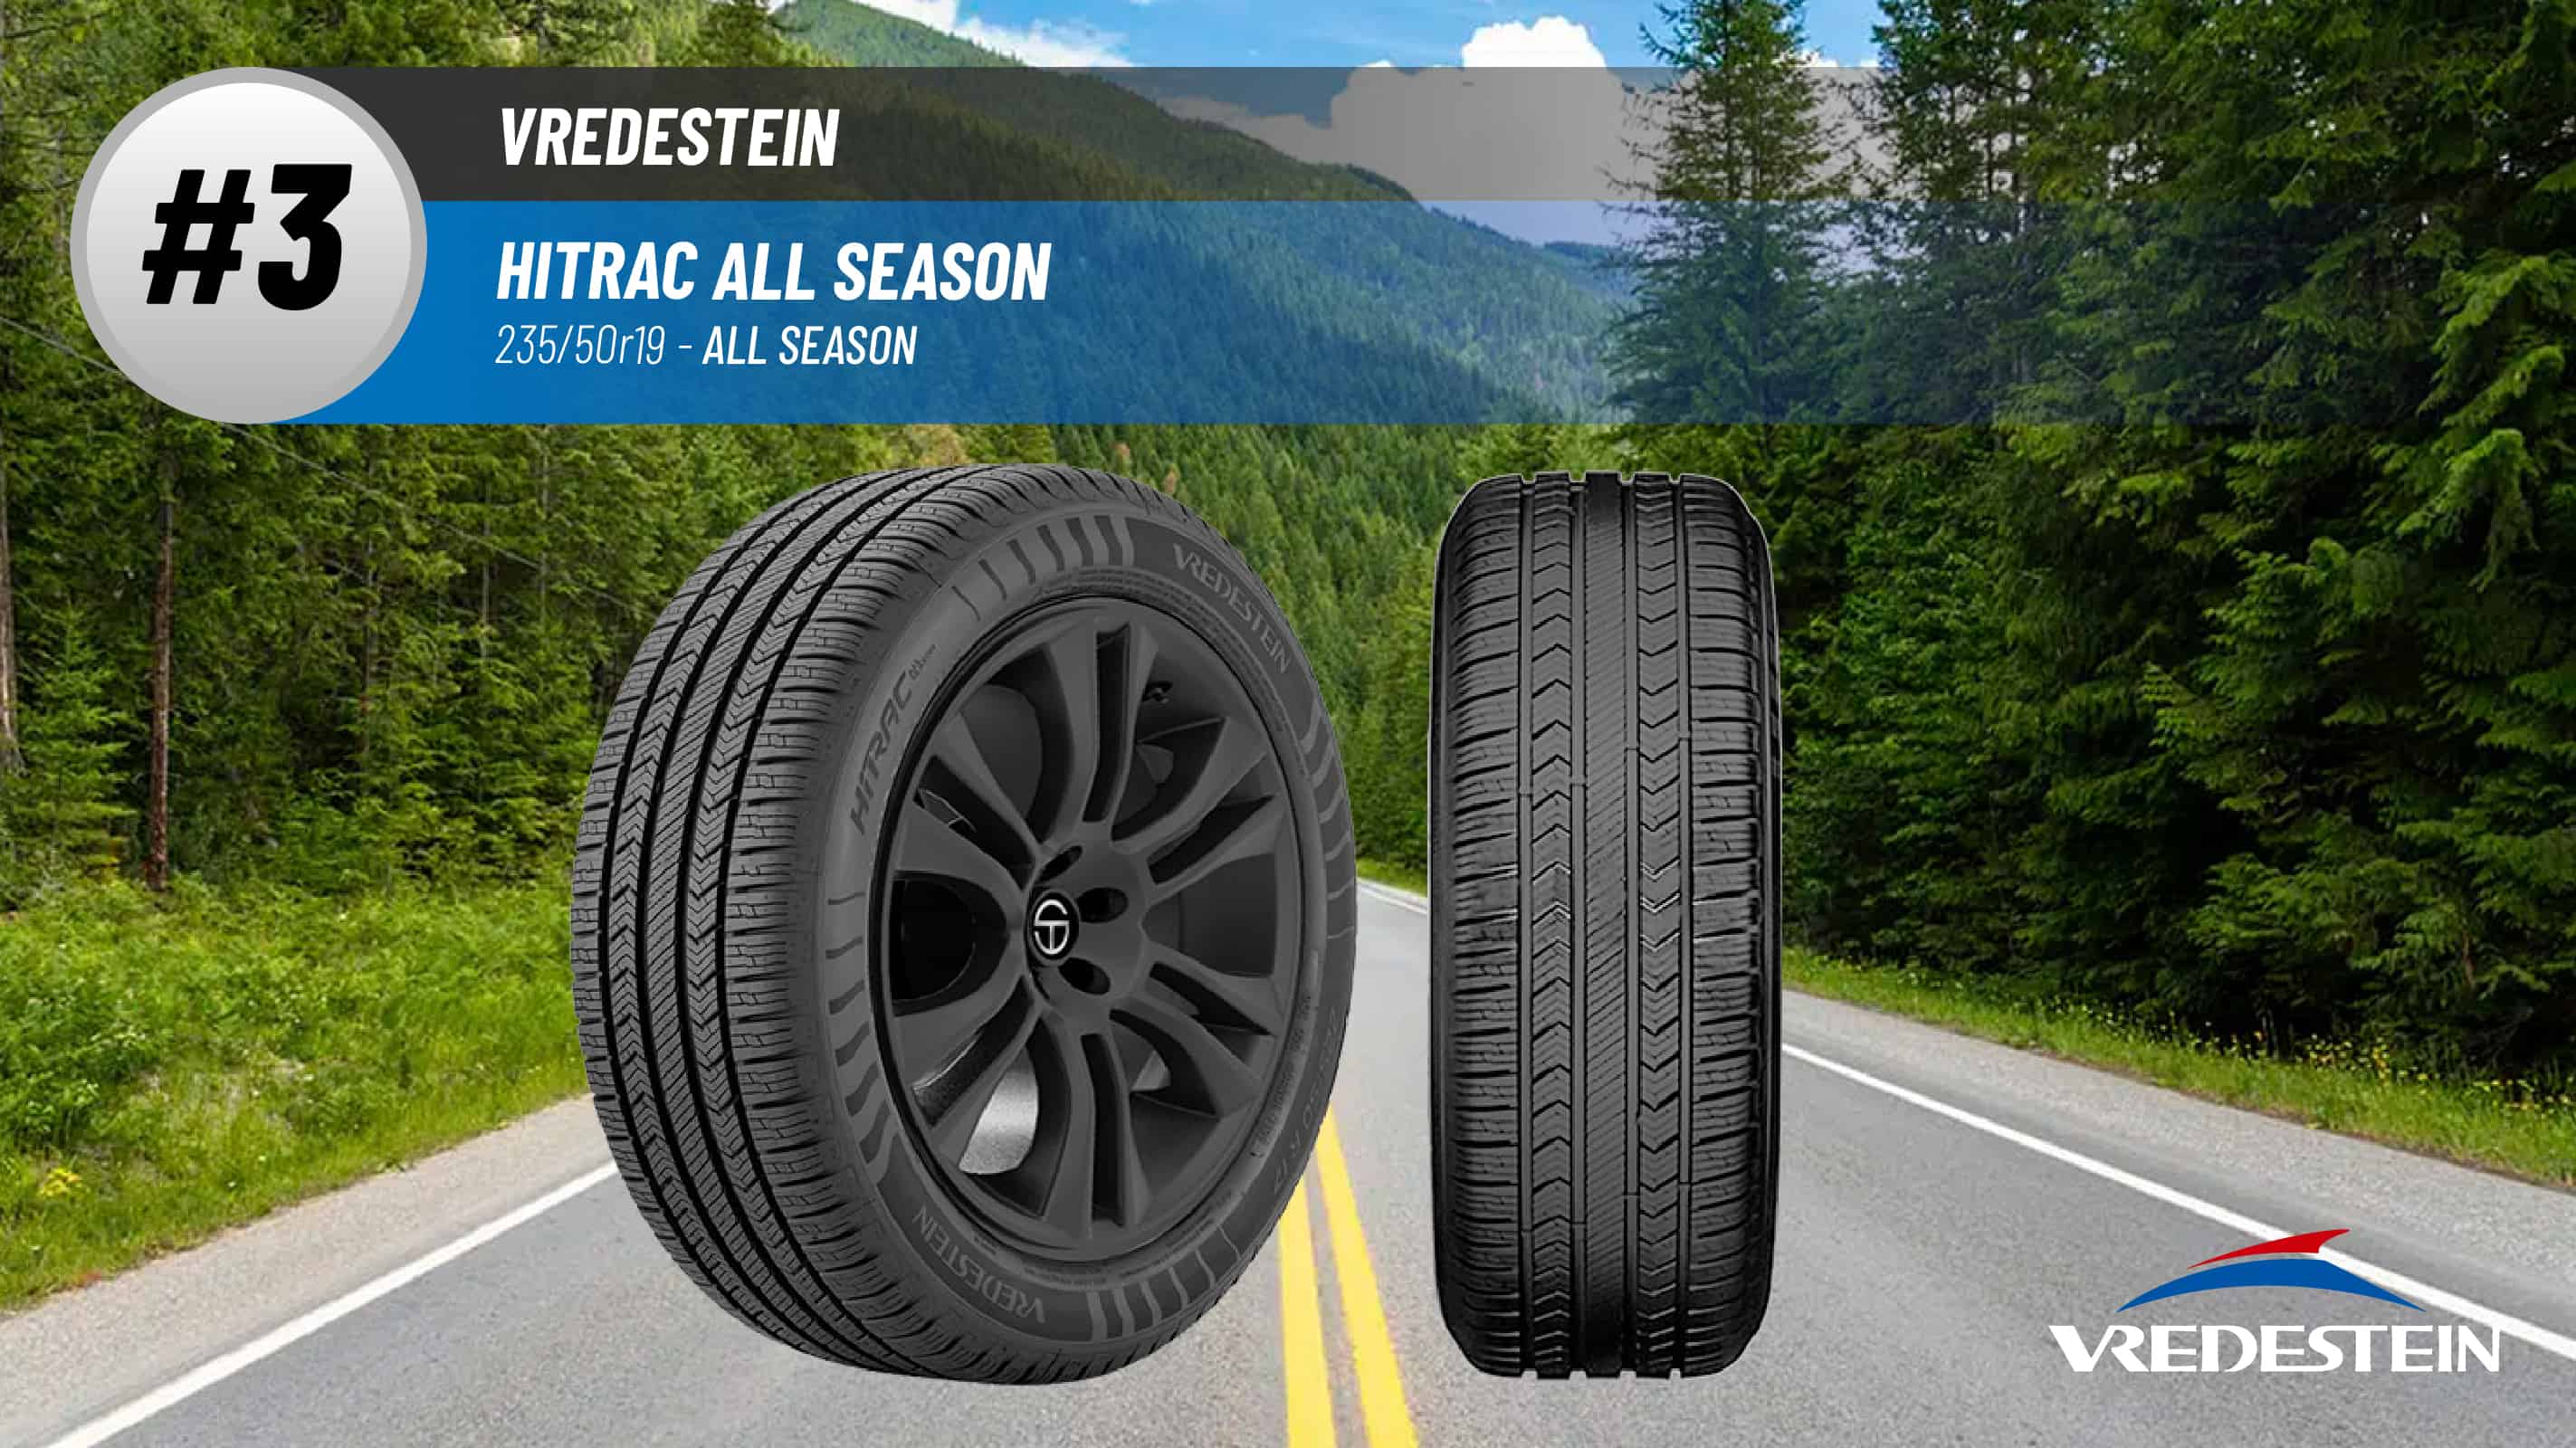 Top #3 All Season Tires: Vredestein Hitrac All Season – 235/50r19